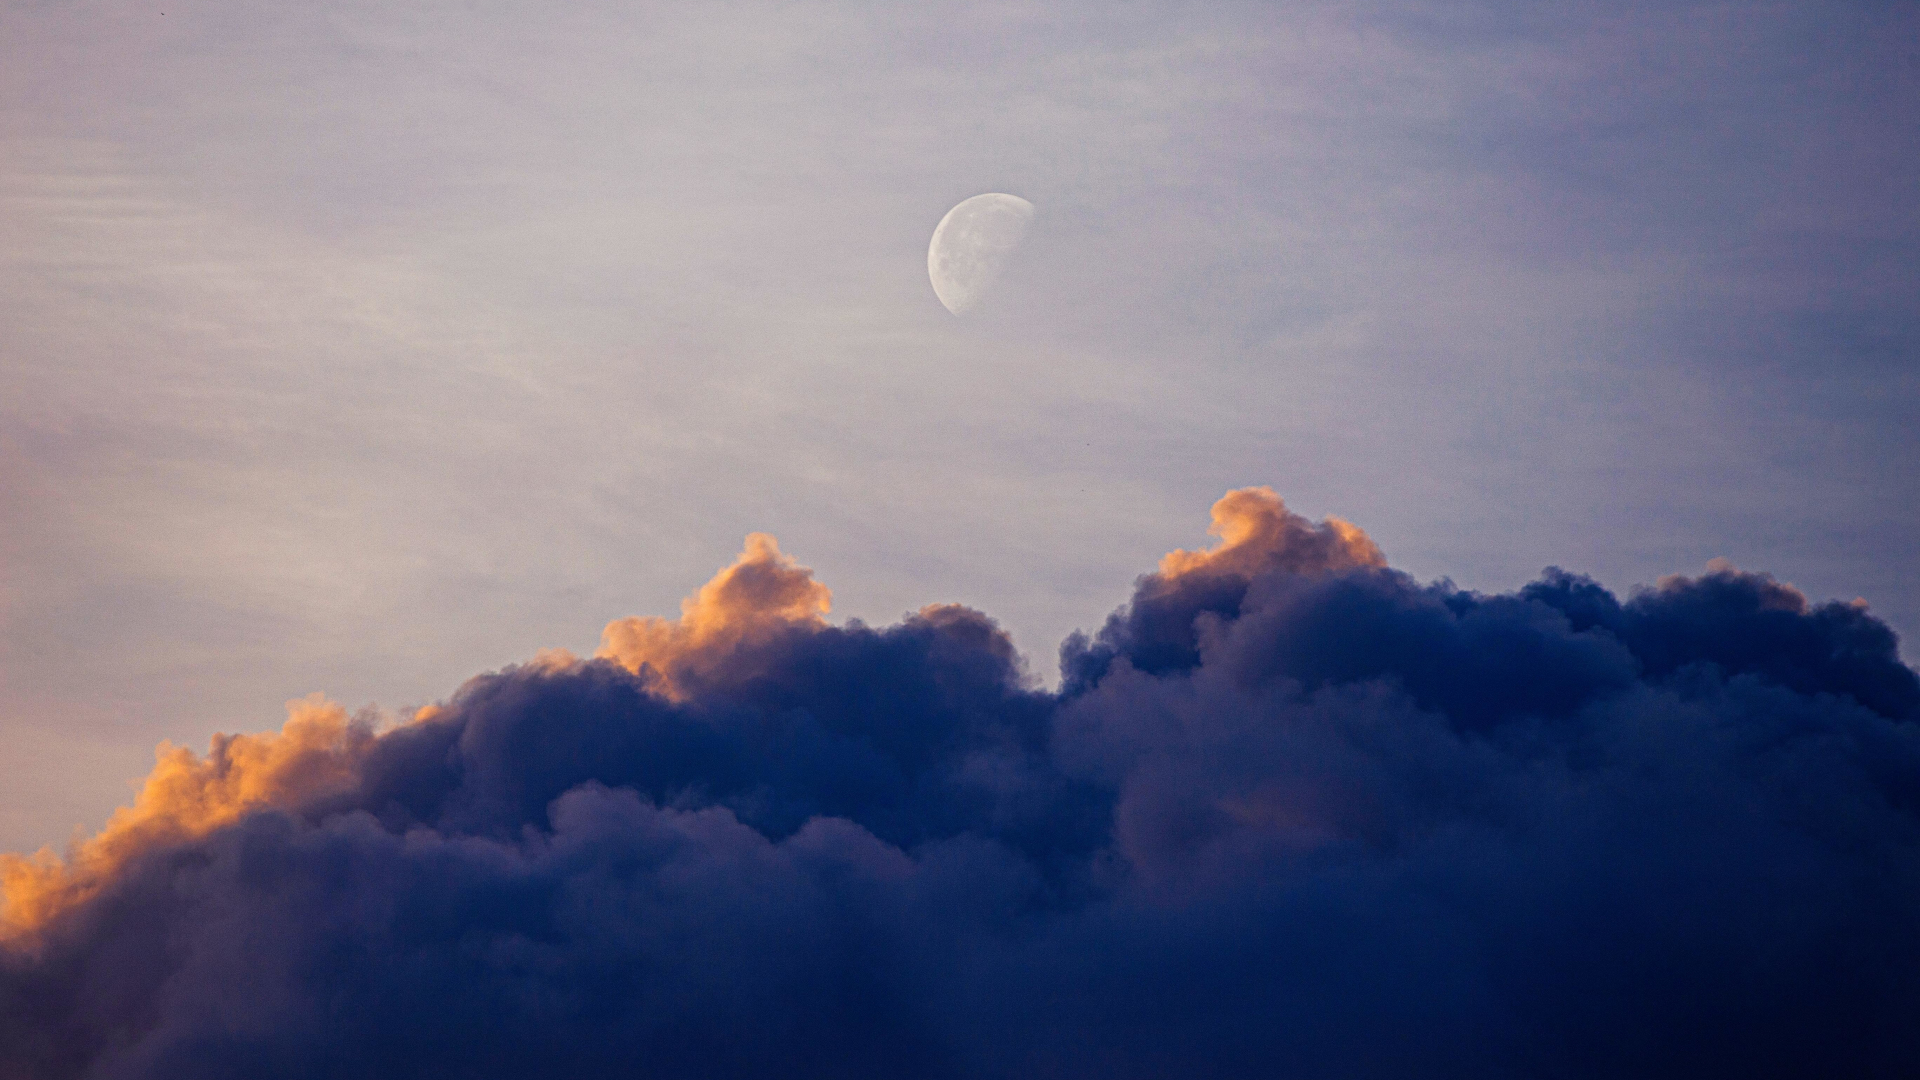 Download 1920x1080 Wallpaper Blue Clouds Blur Moon Sky Full Hd Hdtv